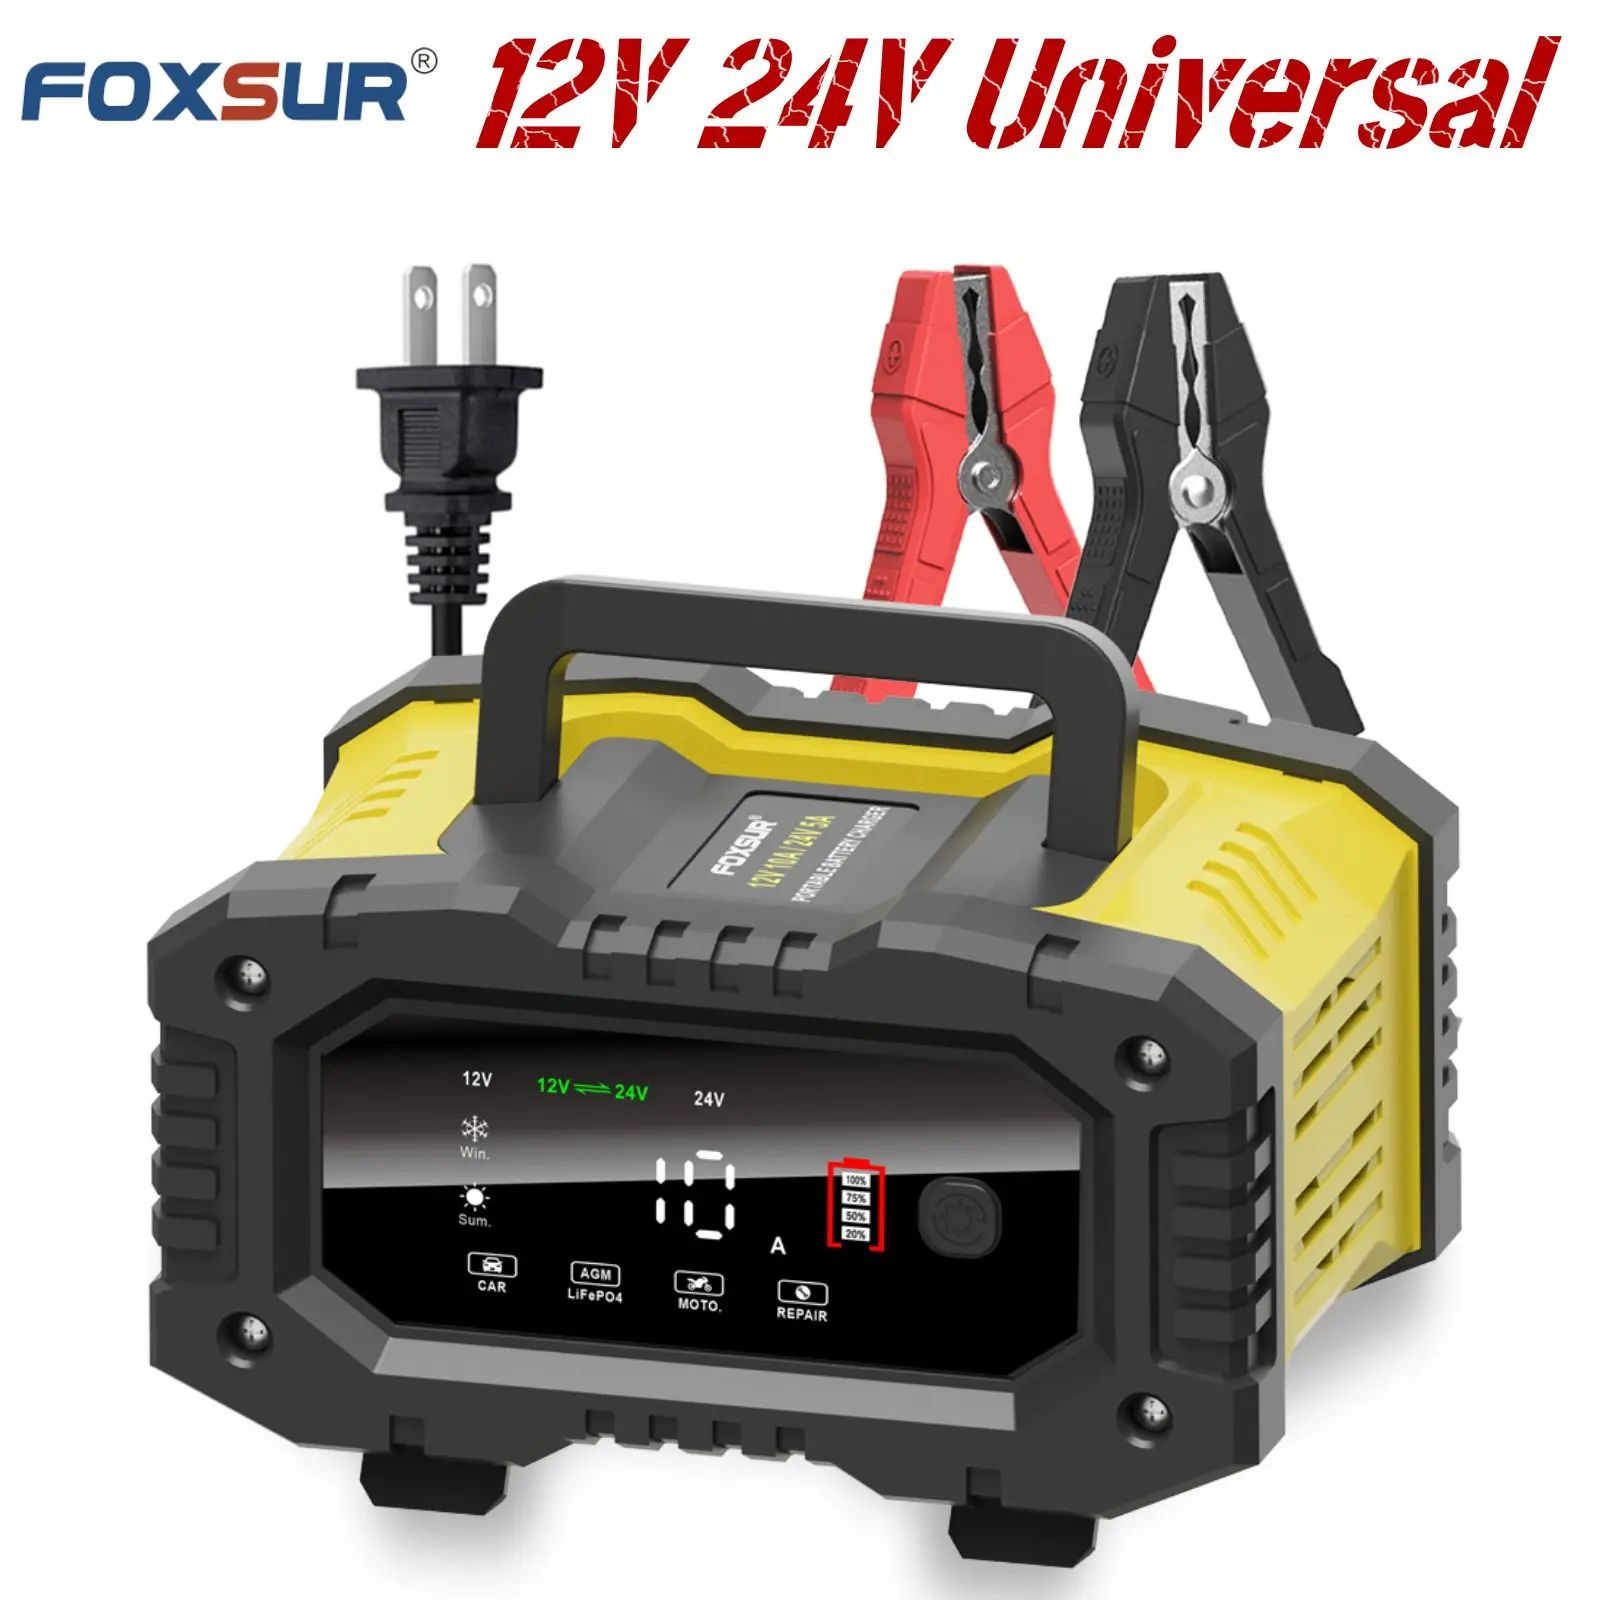 Foxsur Car Battery Chargers • Official Website